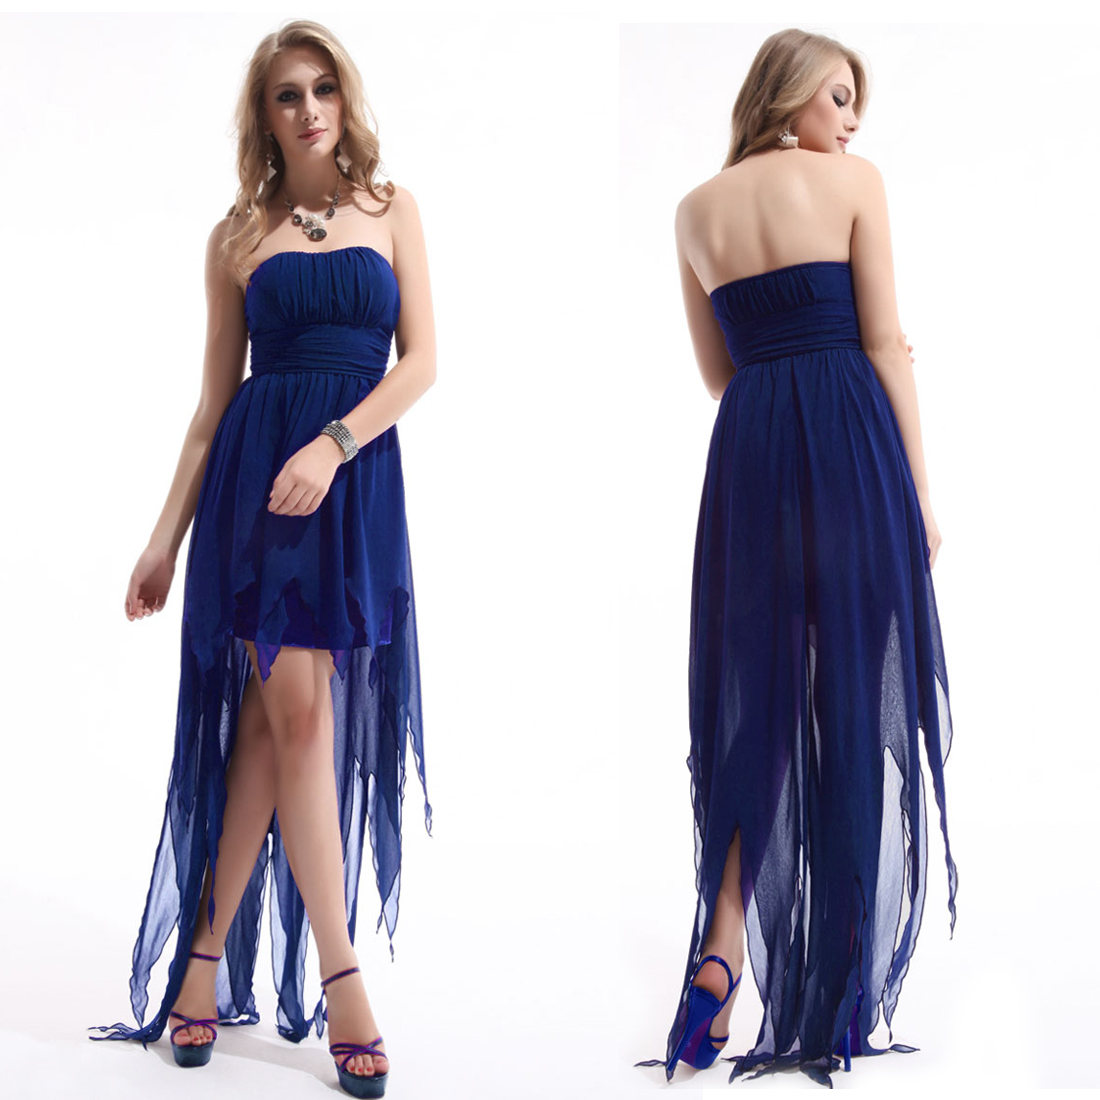 Asymmetric Hem Blue Ruffes Strapless High Low Prom Dress 09684 AU Size 